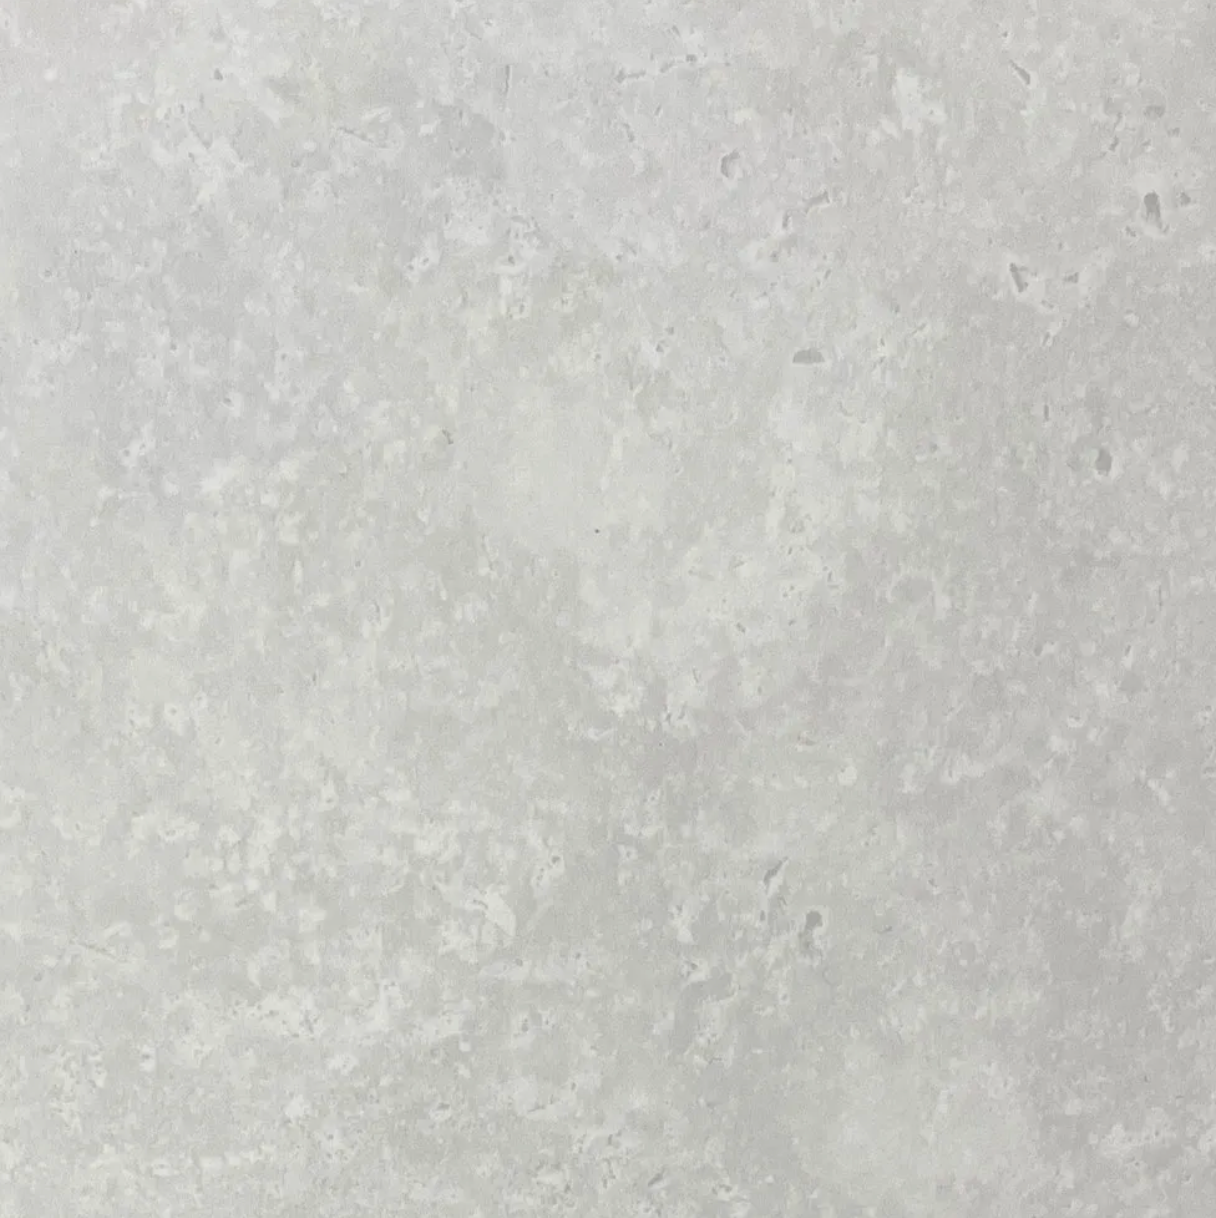 Maxi Shower Panel - White Stone